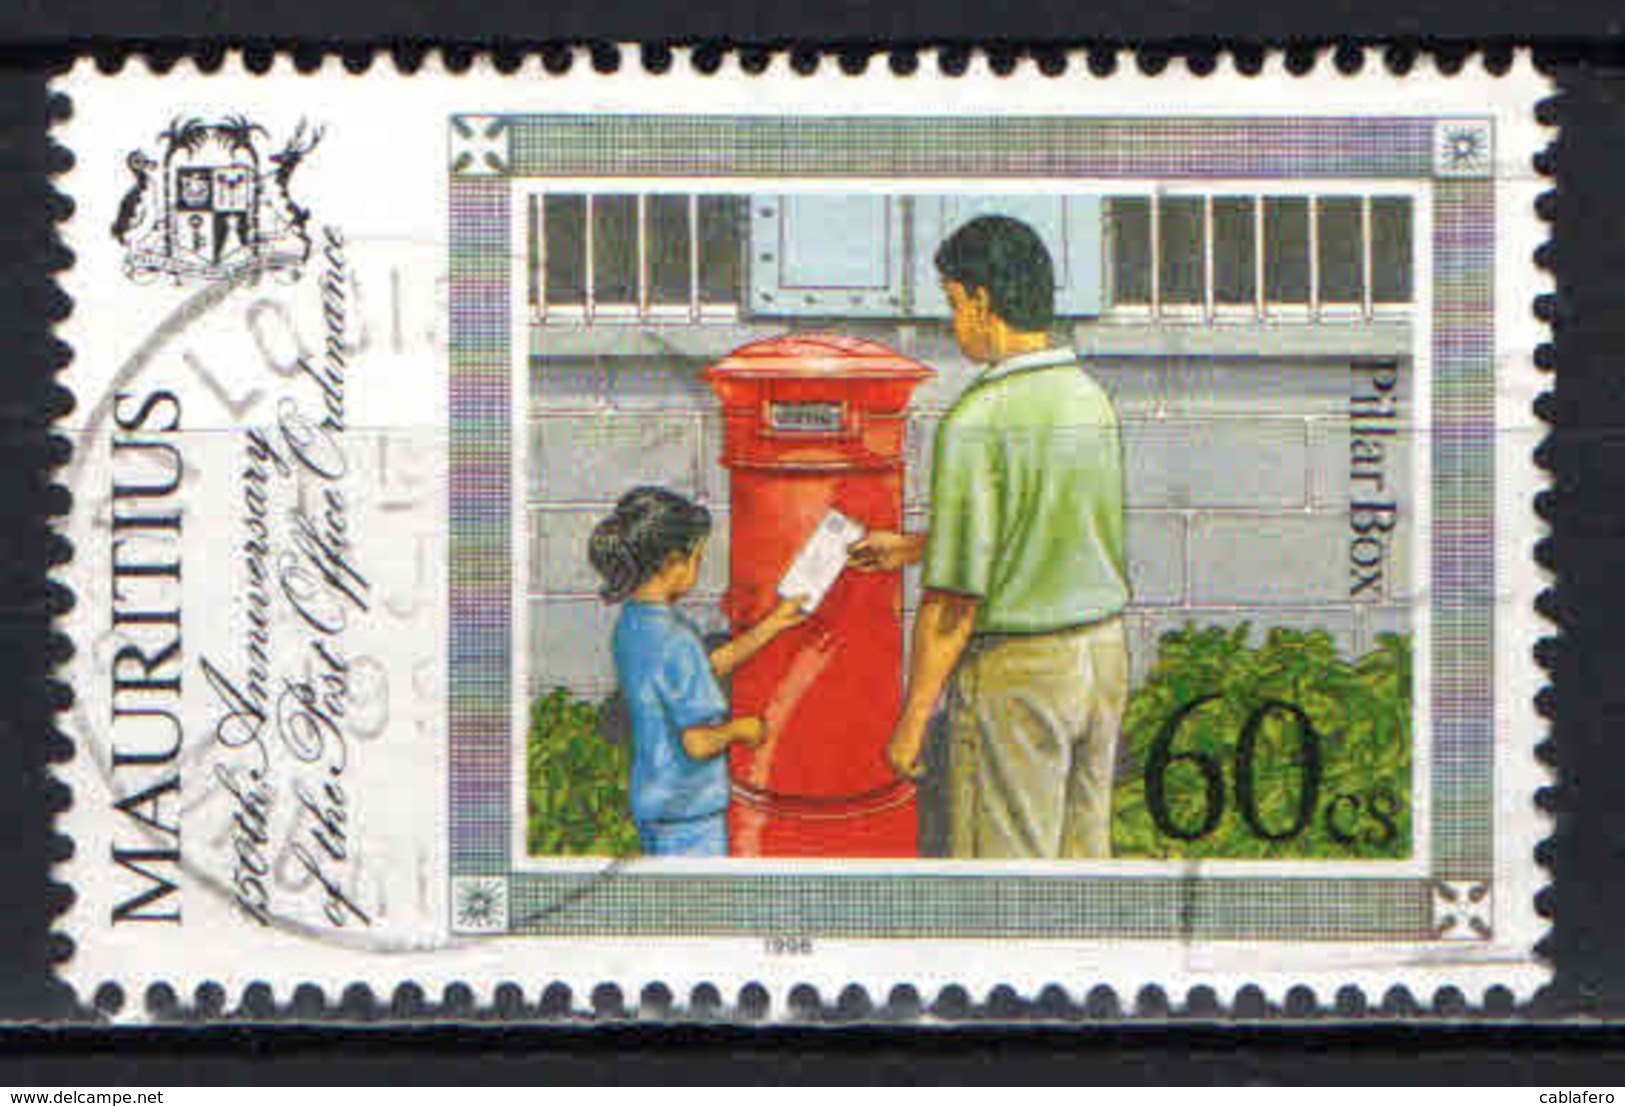 MAURITIUS - 1996 - Post Office Ordinance, 150th Anniv. - USATO - Mauritius (1968-...)